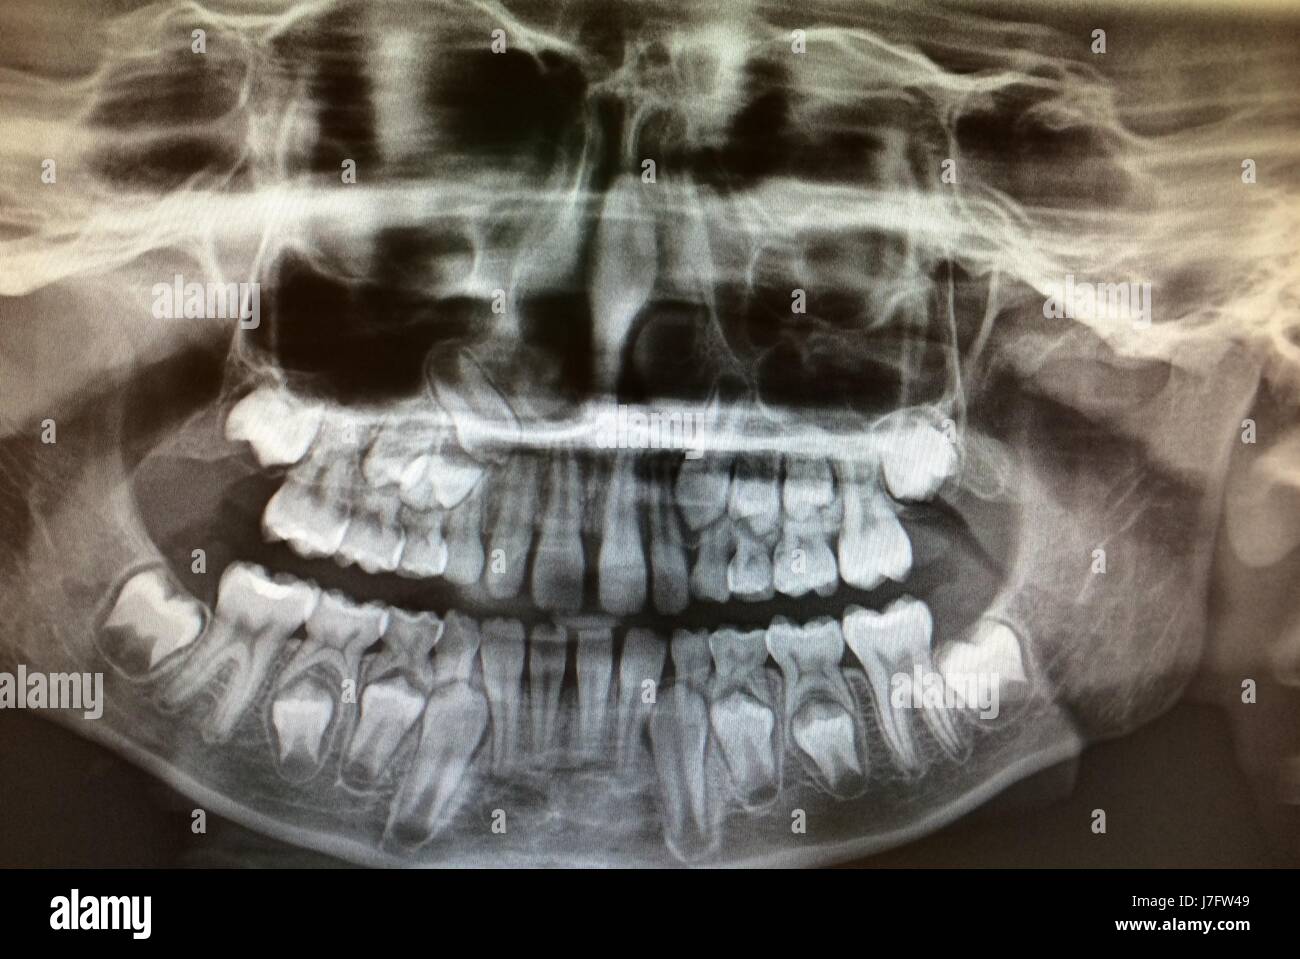 Panoramic Dental X-Ray of Childs Teeth Development Stock Photo